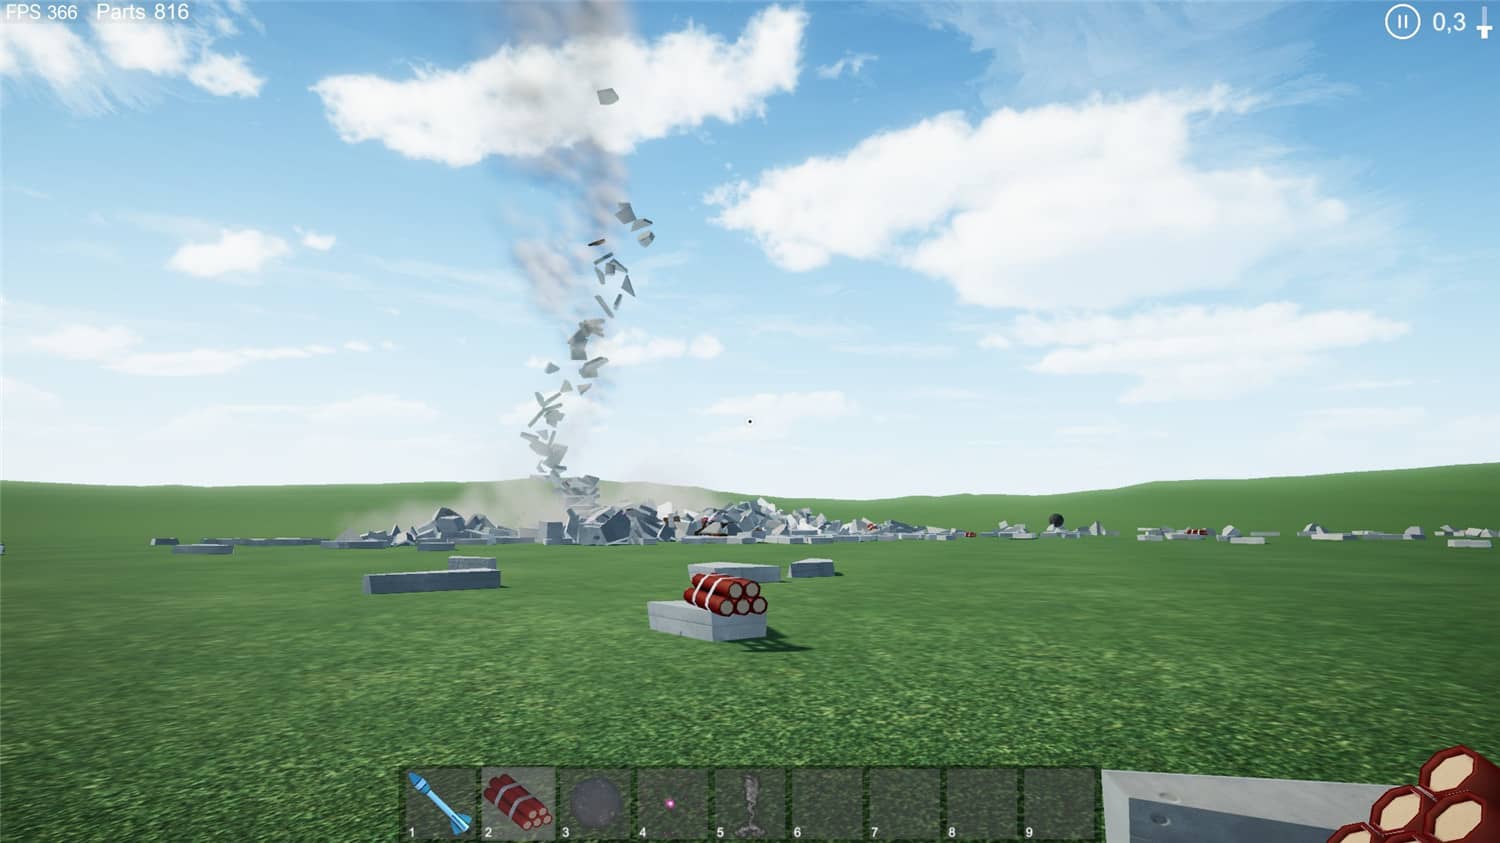 Destructive Physics - Destruction Simulator插图7